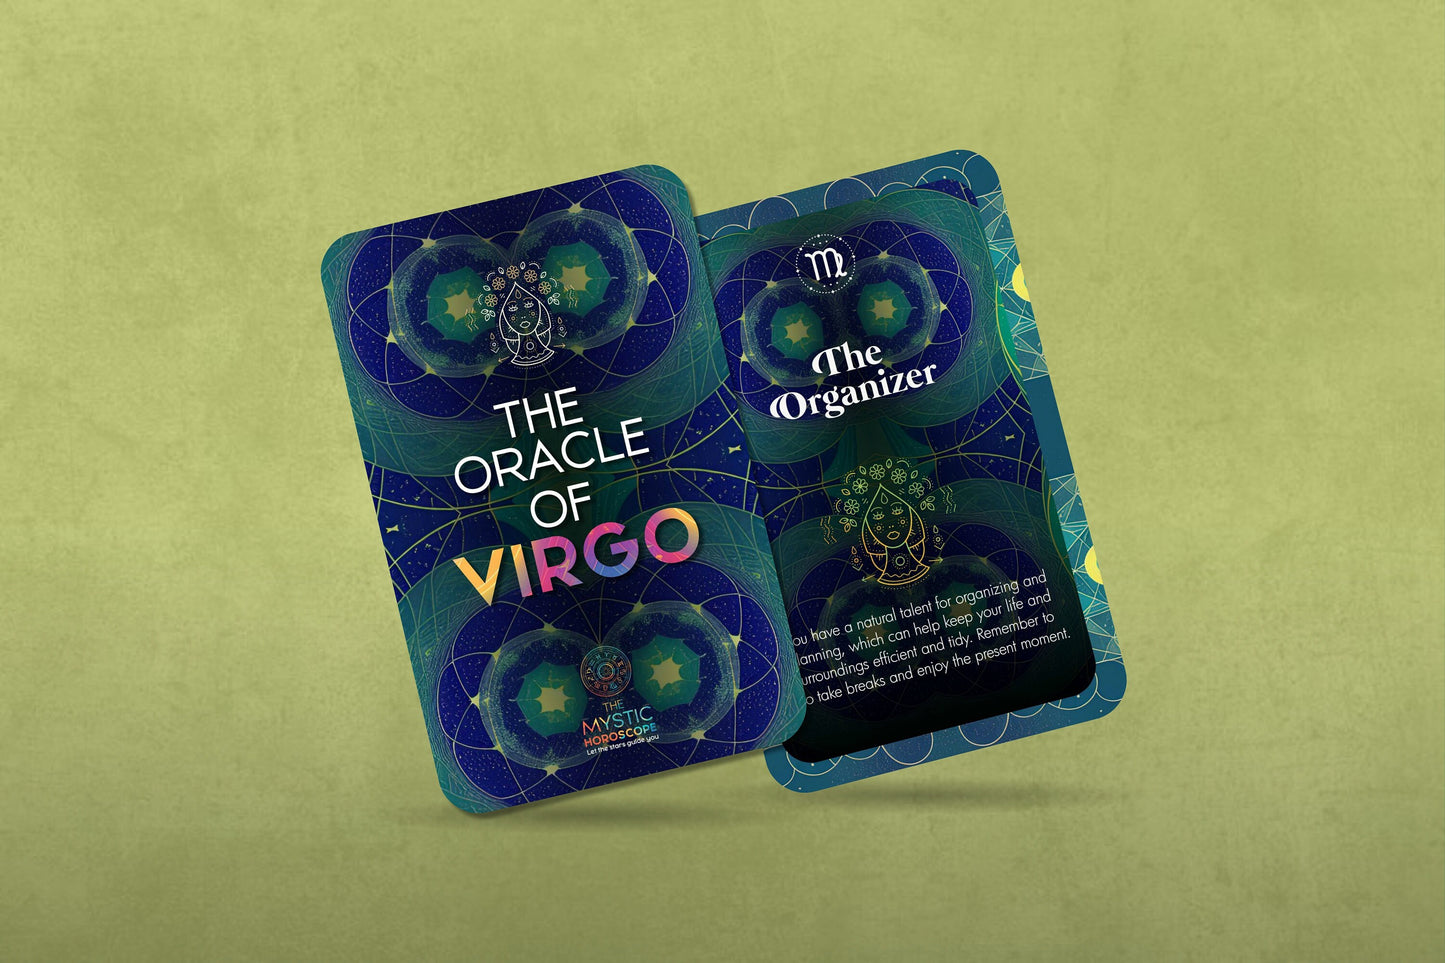 The Oracle of Virgo - The Mystic Horoscope